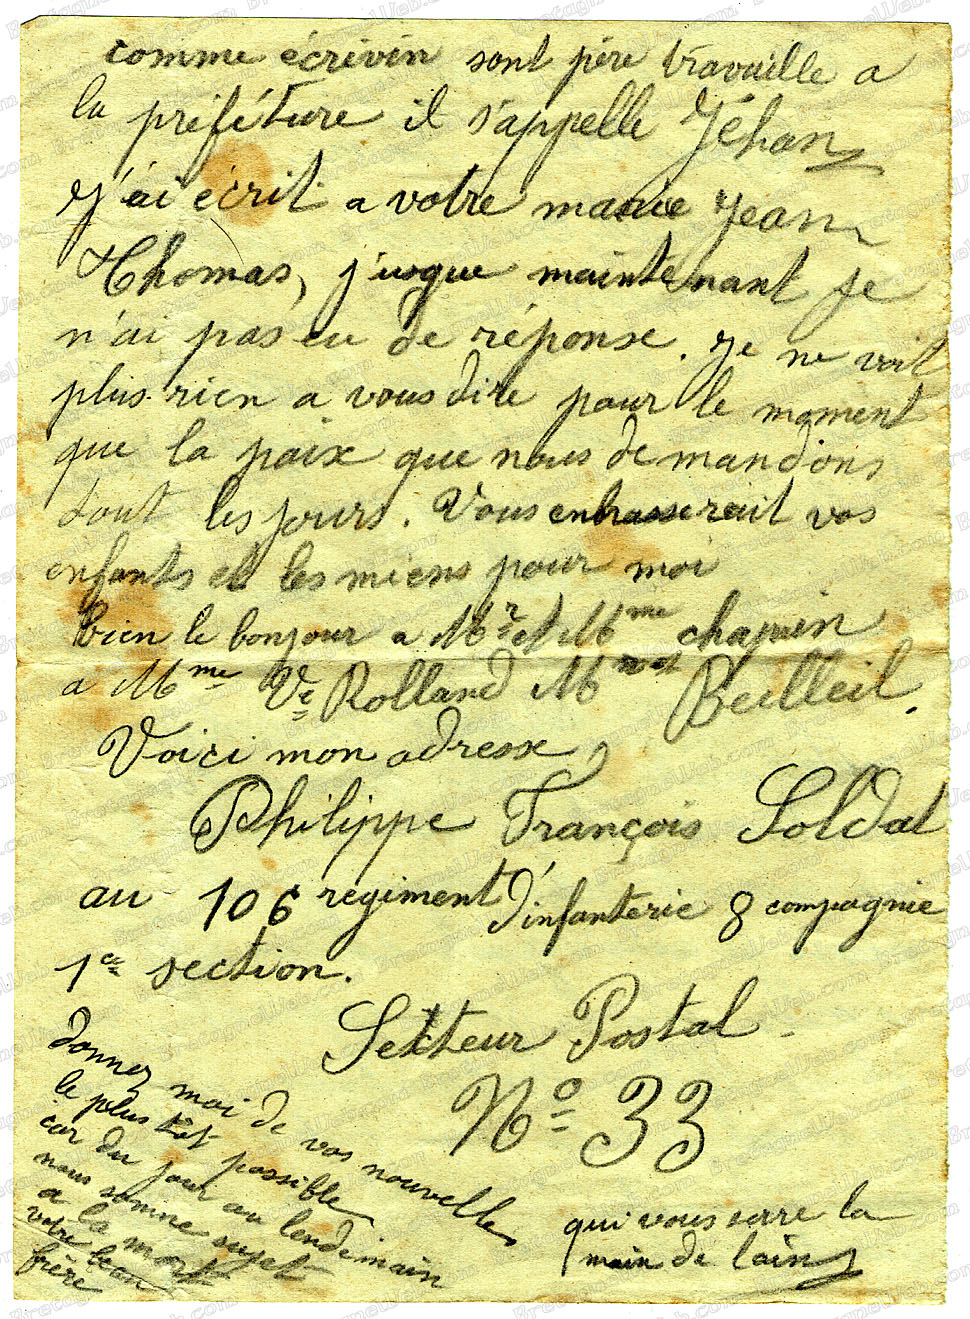 francois philippe 1915-05-06 verso